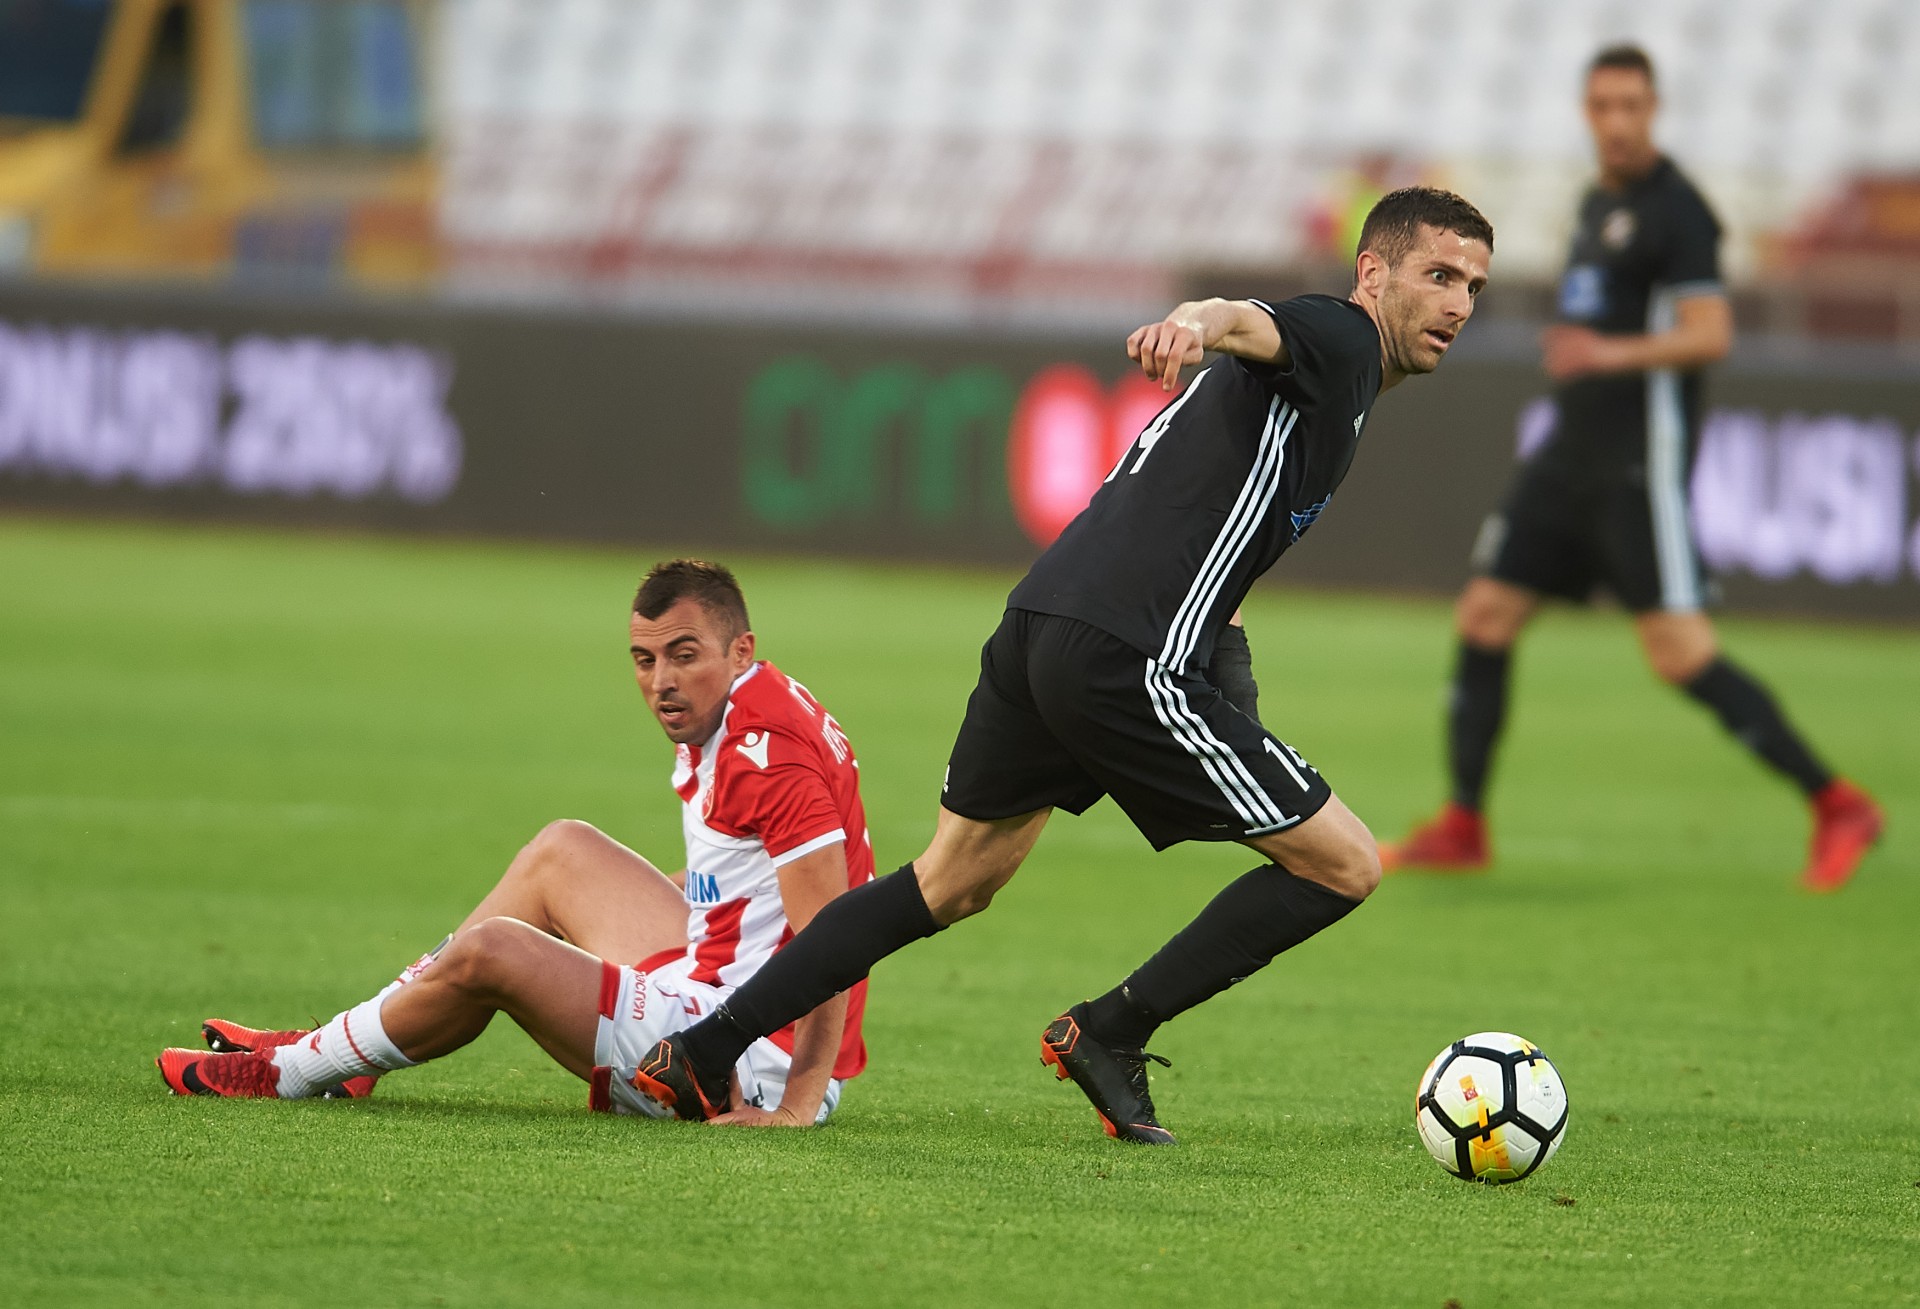 Kajević uzima loptu ispred Krstičića - Nenad Krstičić,Asmir Kajević | FkCukaricki